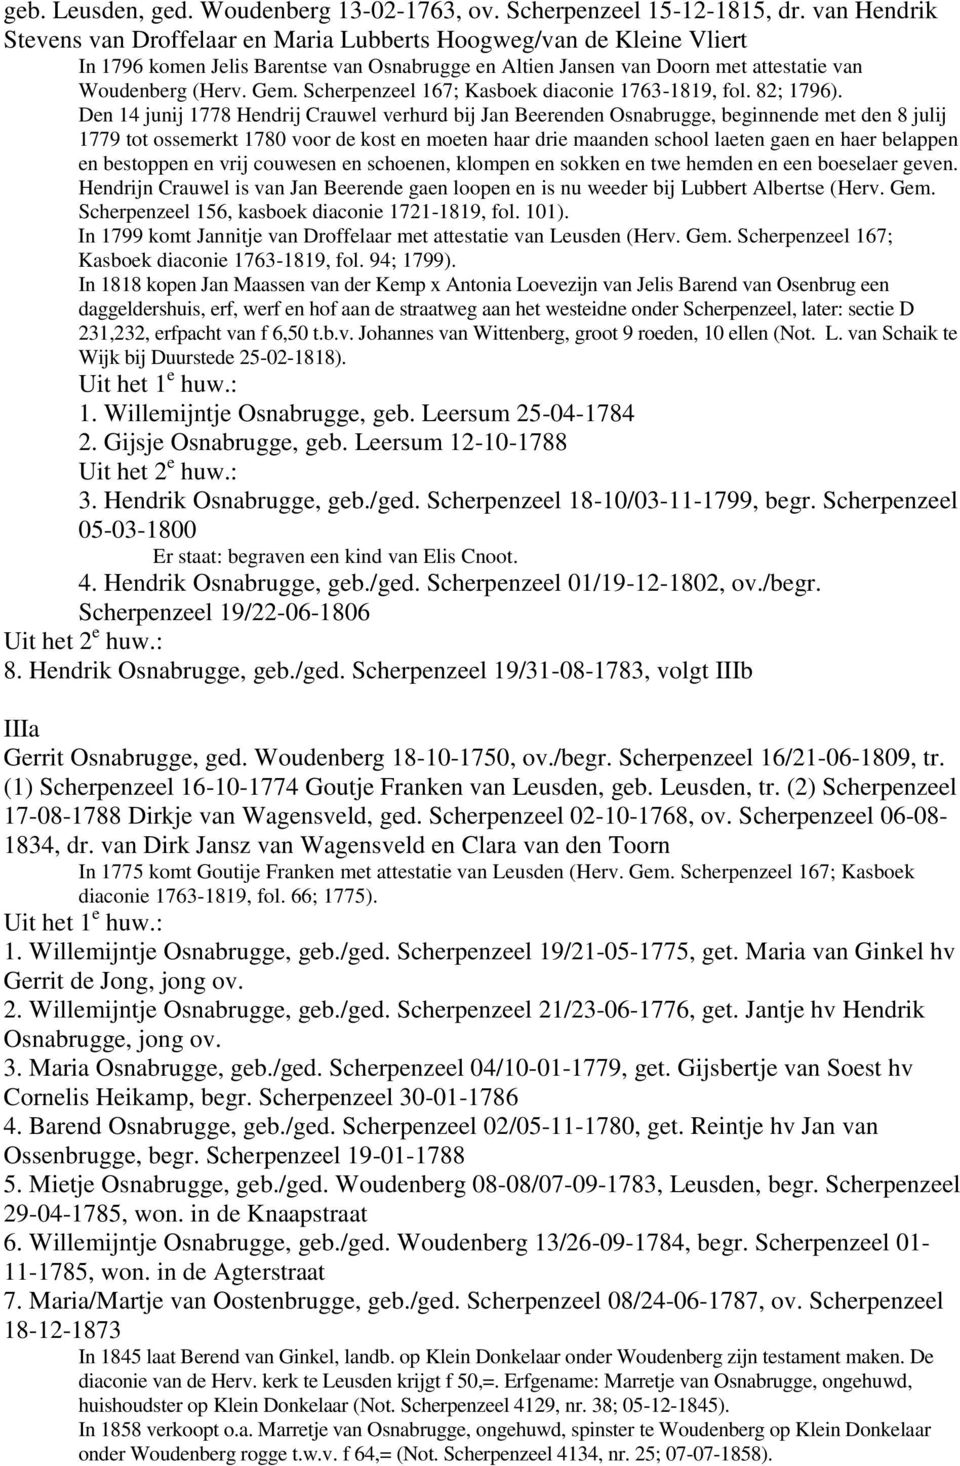 Scherpenzeel 167; Kasboek diaconie 1763-1819, fol. 82; 1796).